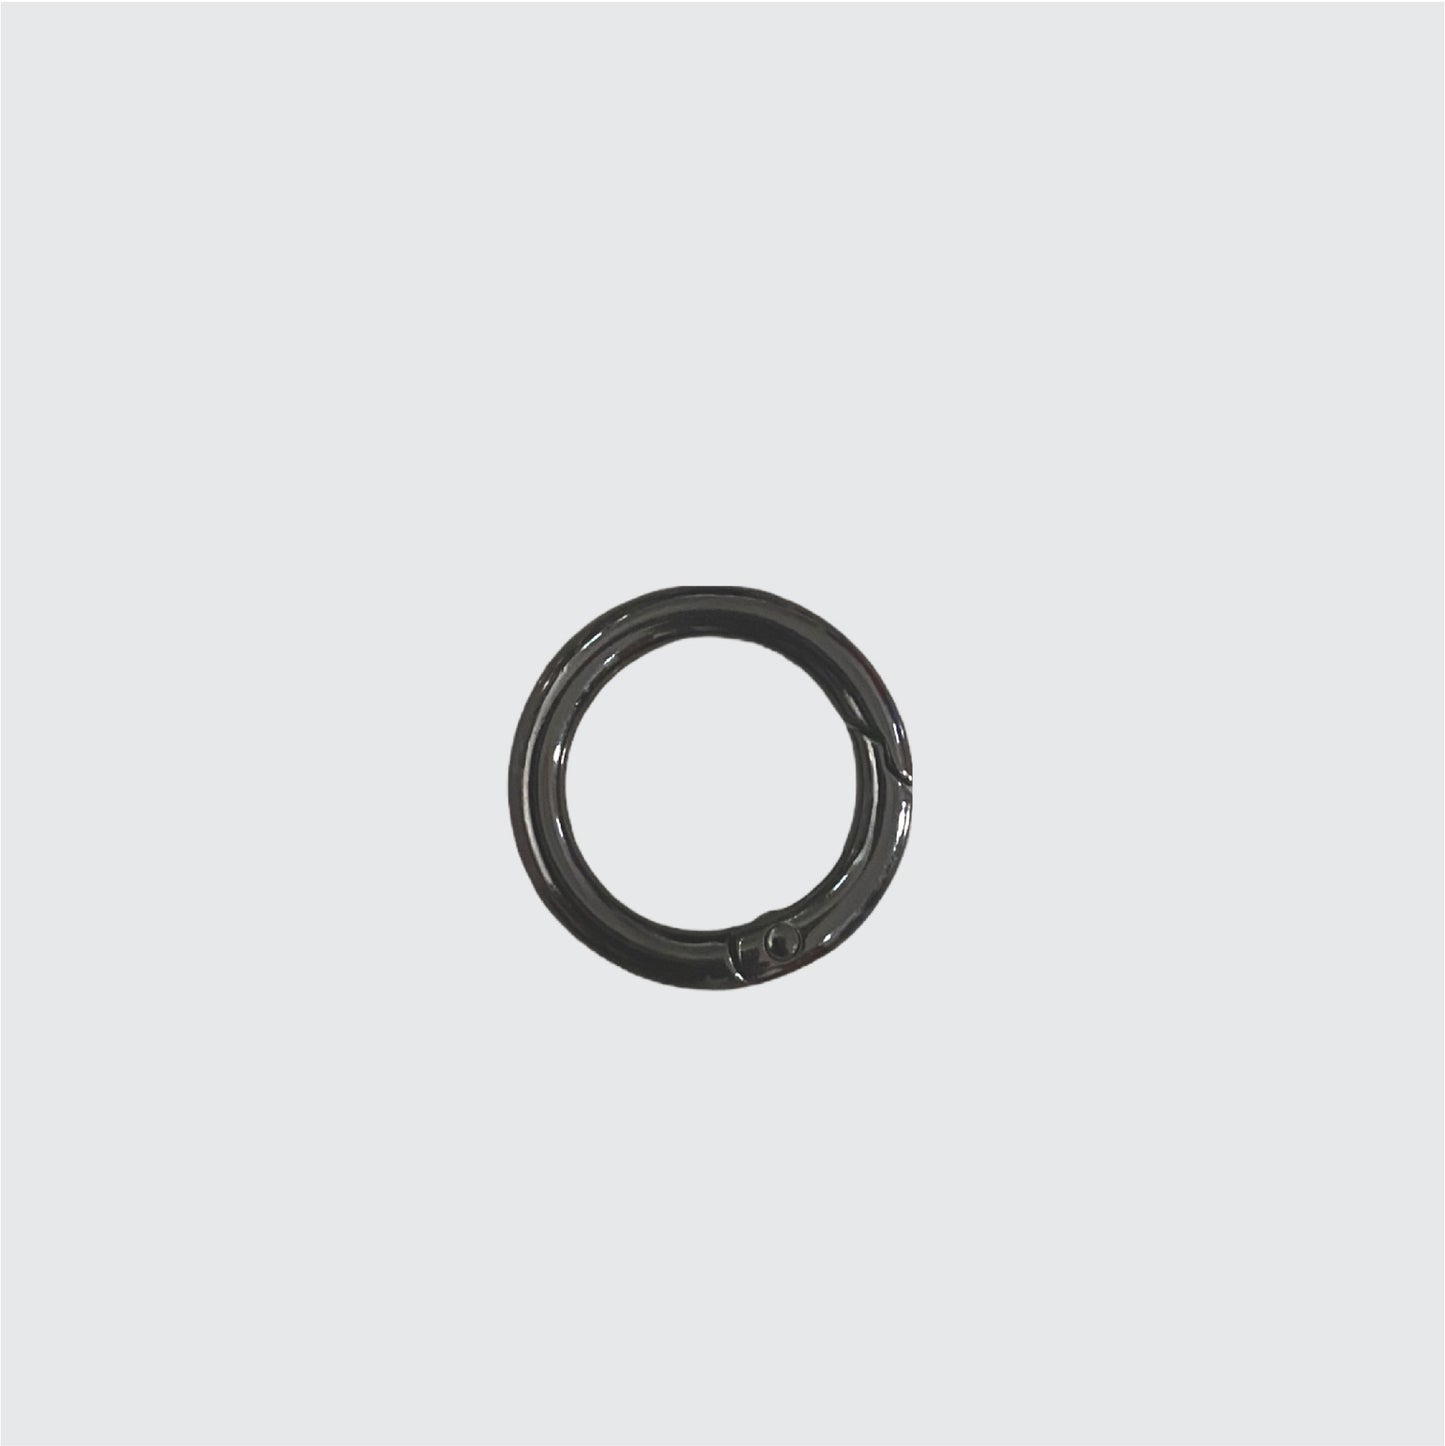 Metallic black carabiner/o-ring | Accessories / Add-on